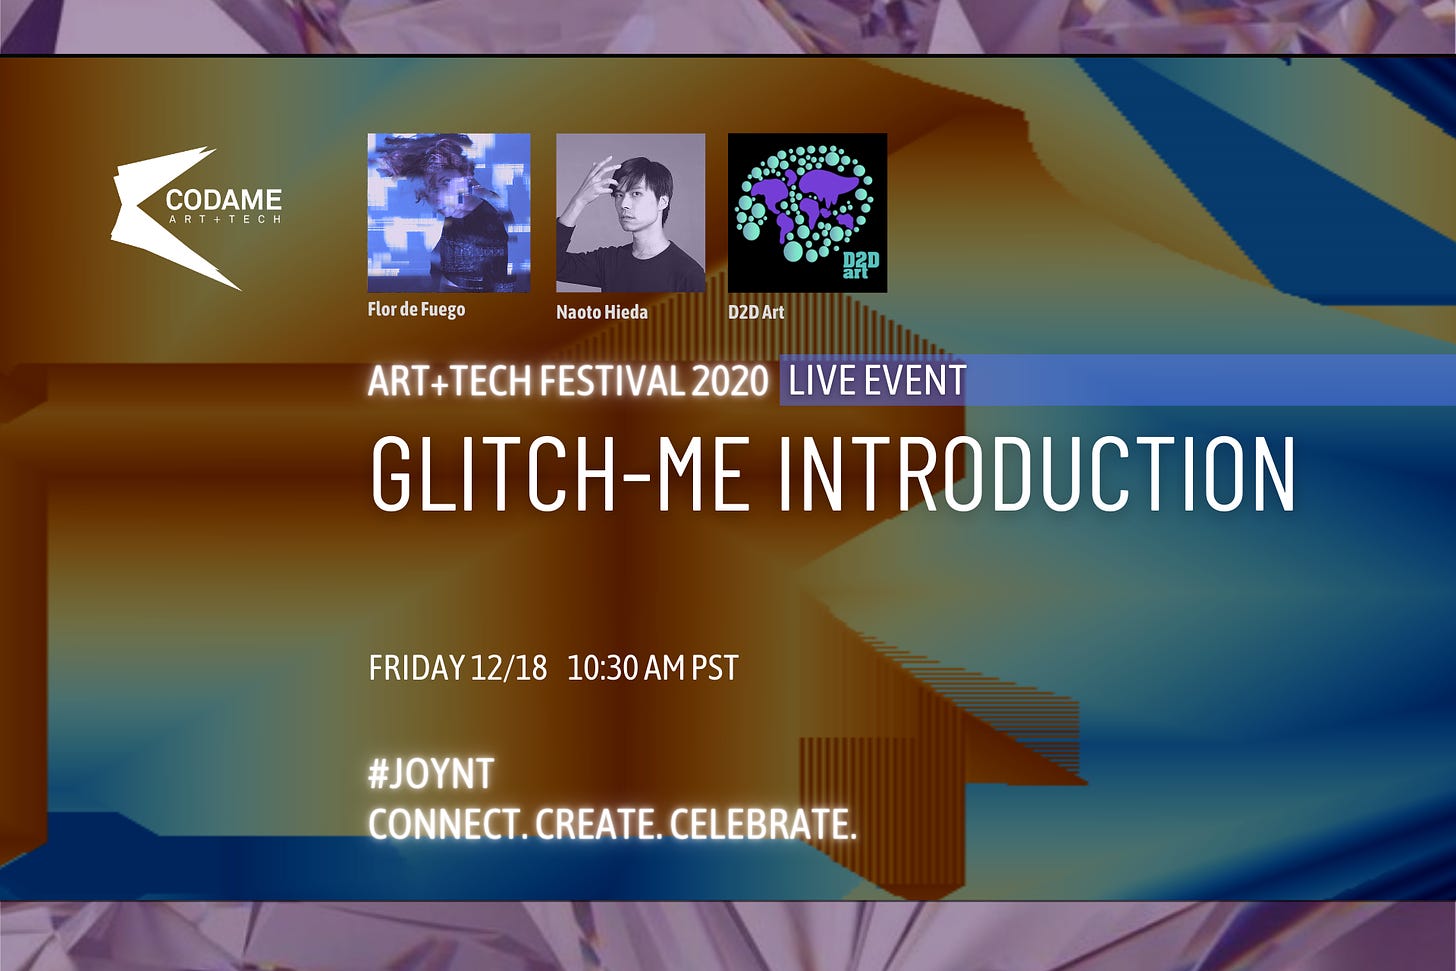 Glitch-me Introduction